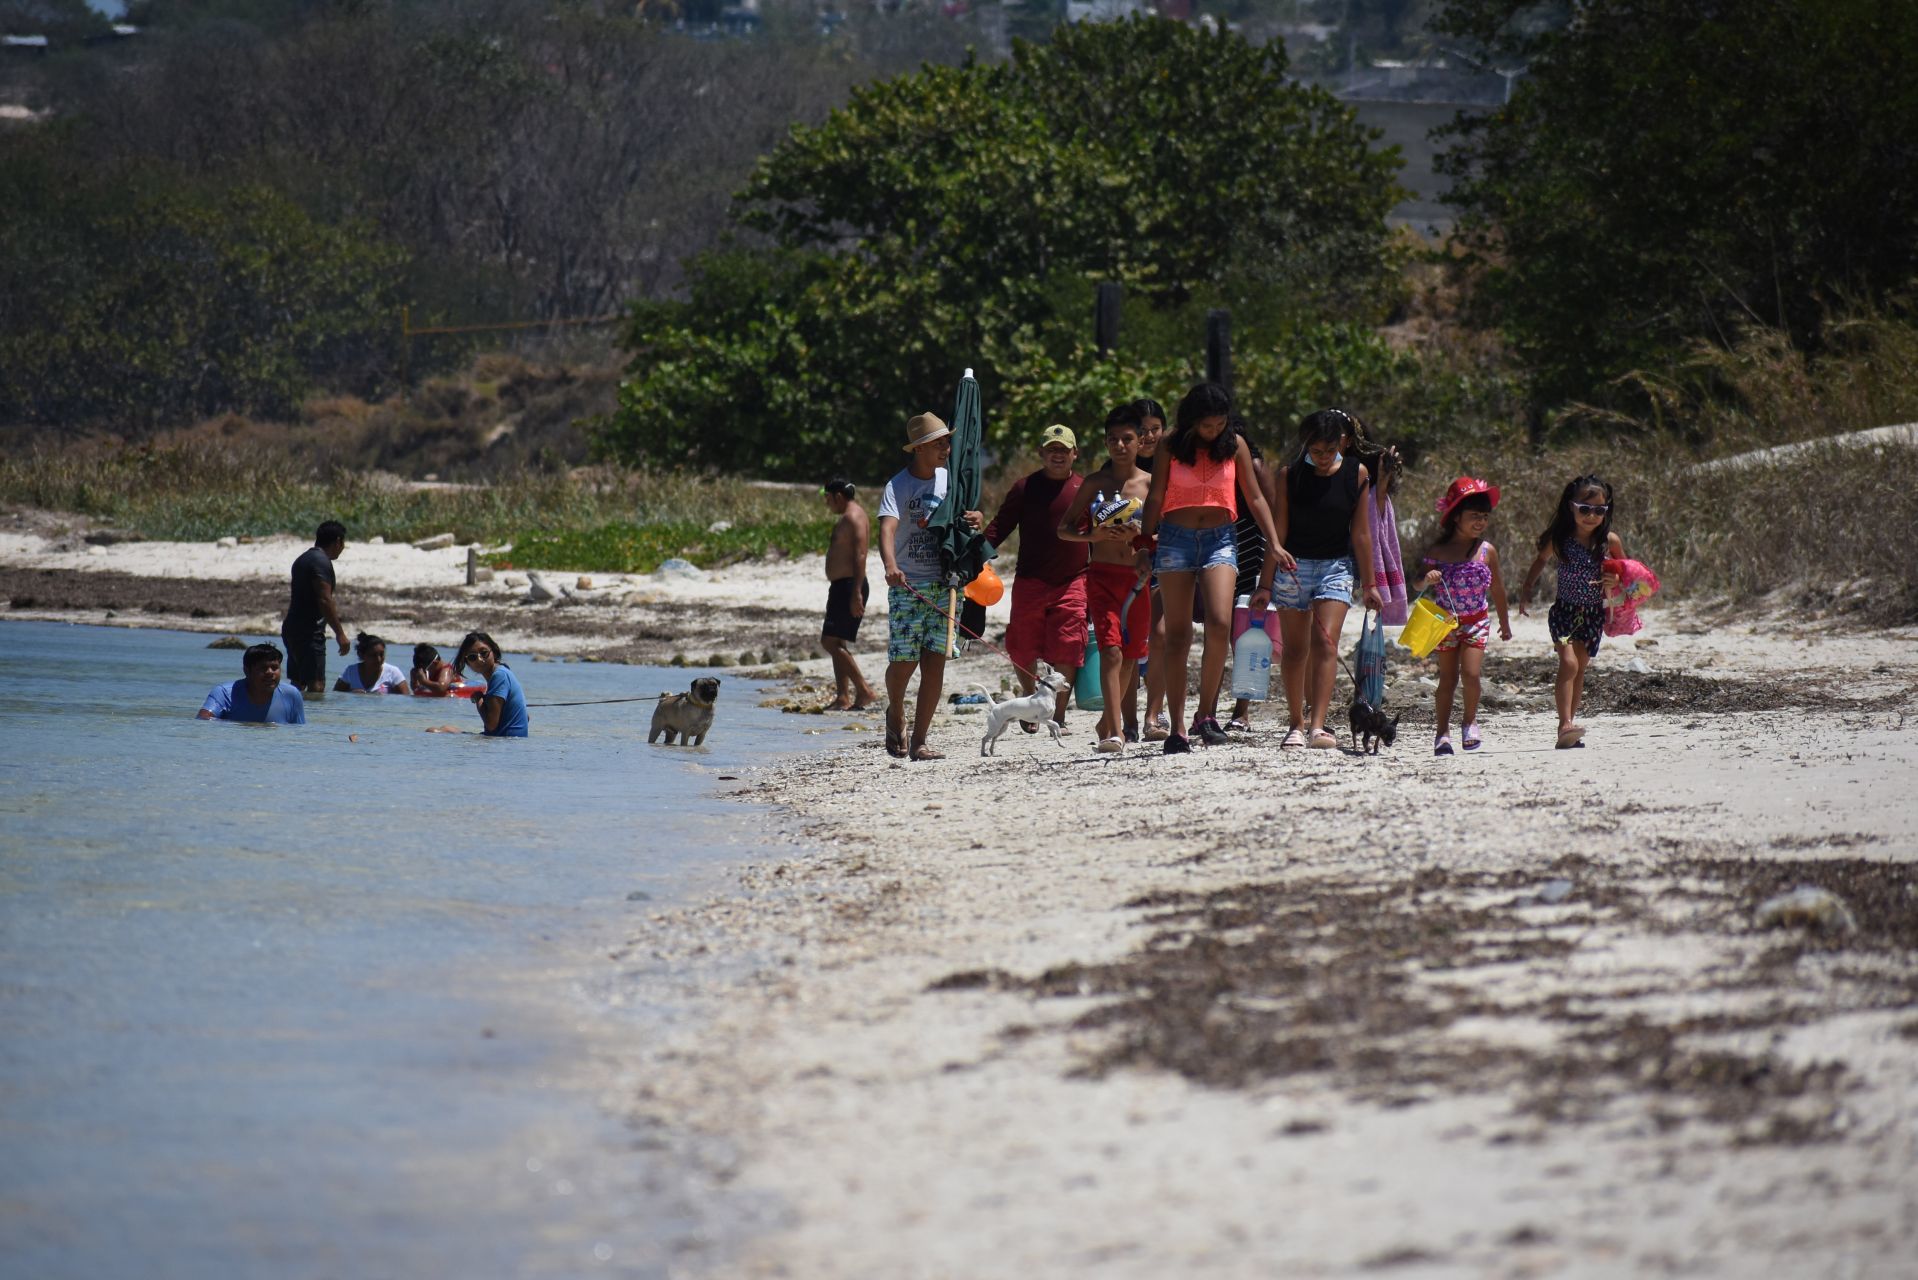 Fotos: Turistas van a playas por Semana Santa pese a COVID